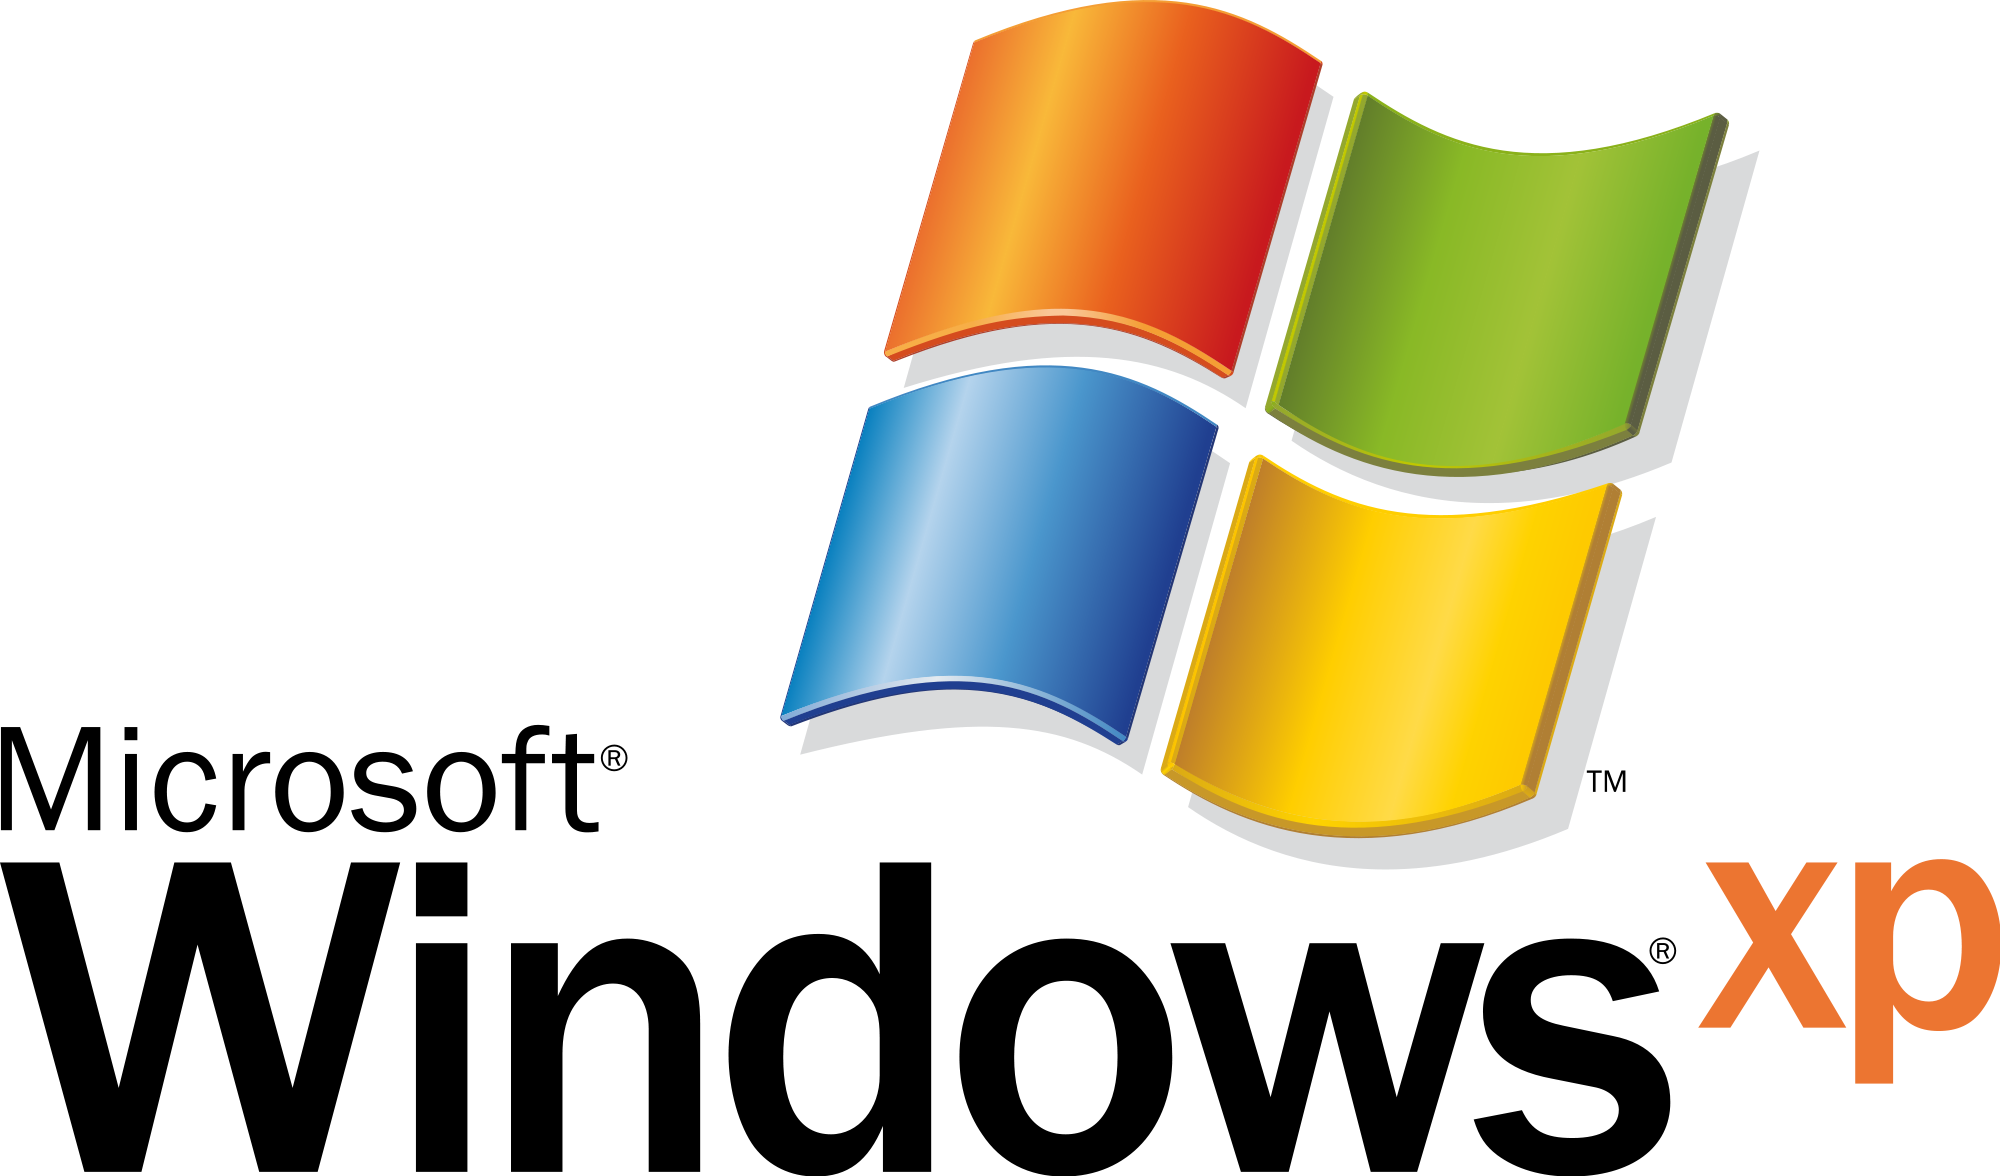 Windows logos PNG images 